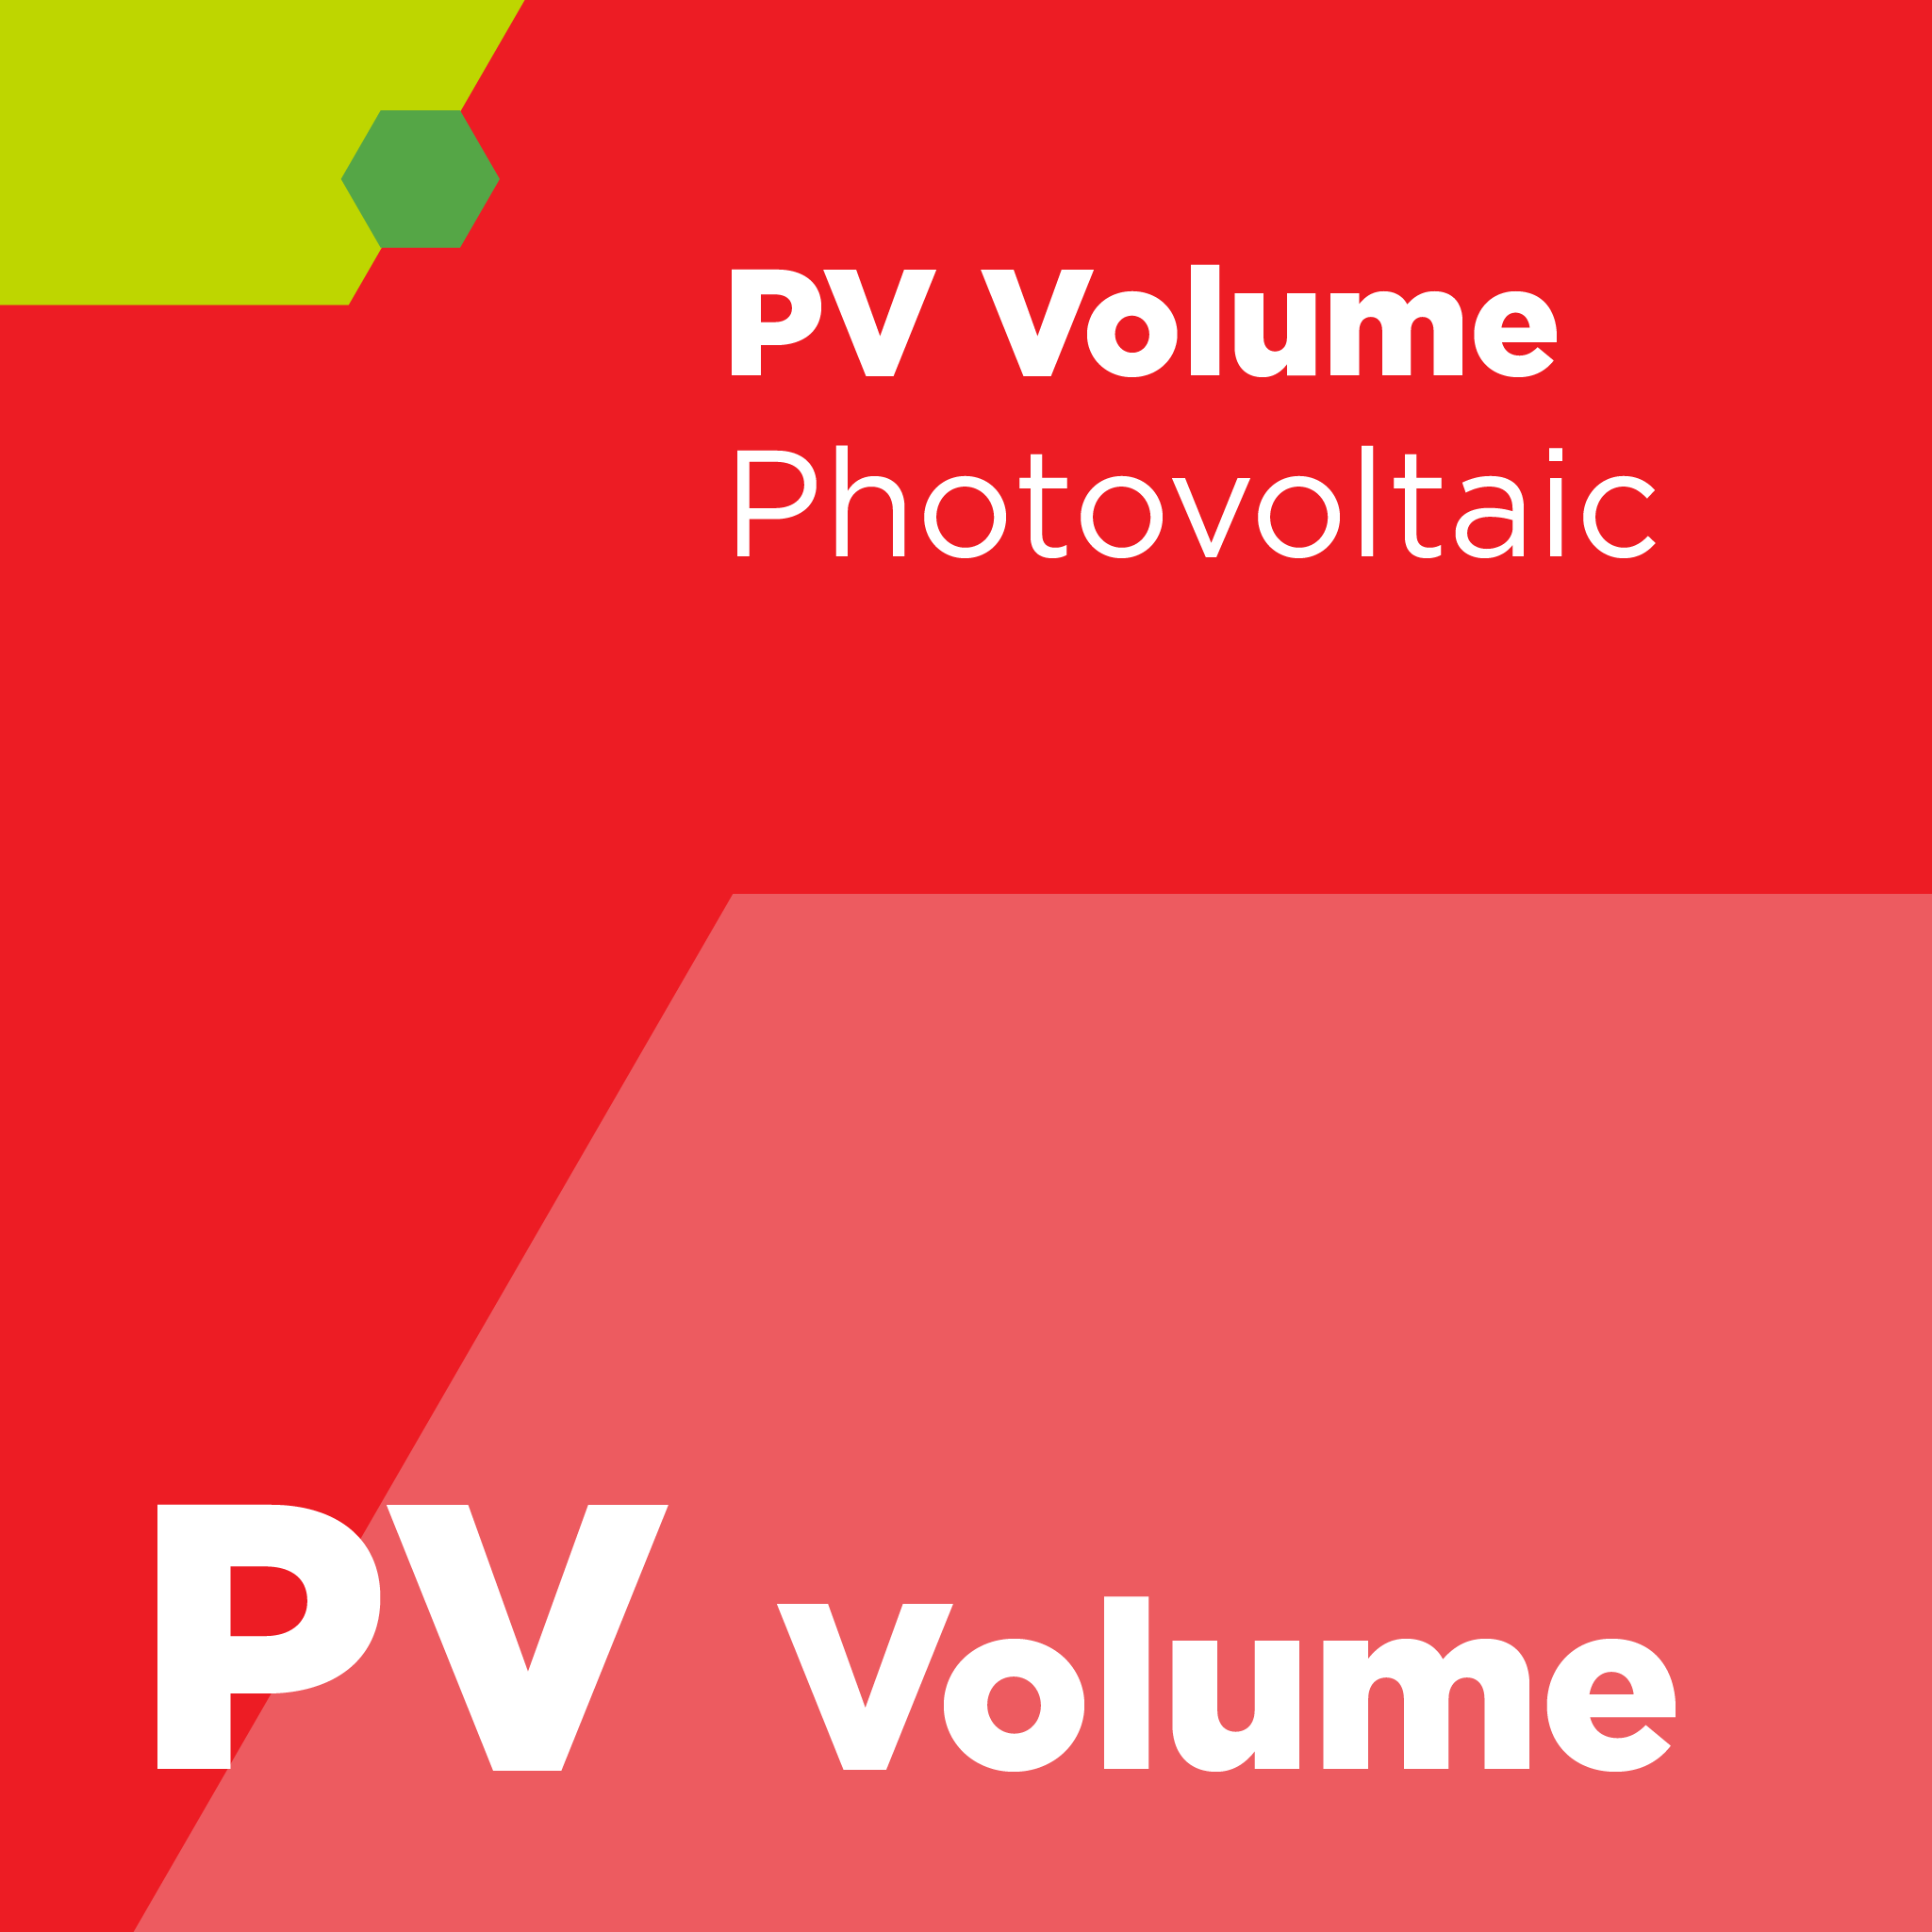 PV00200 - SEMI PV2 - Guide for PV Equipment Communication Interfaces (PVECI)